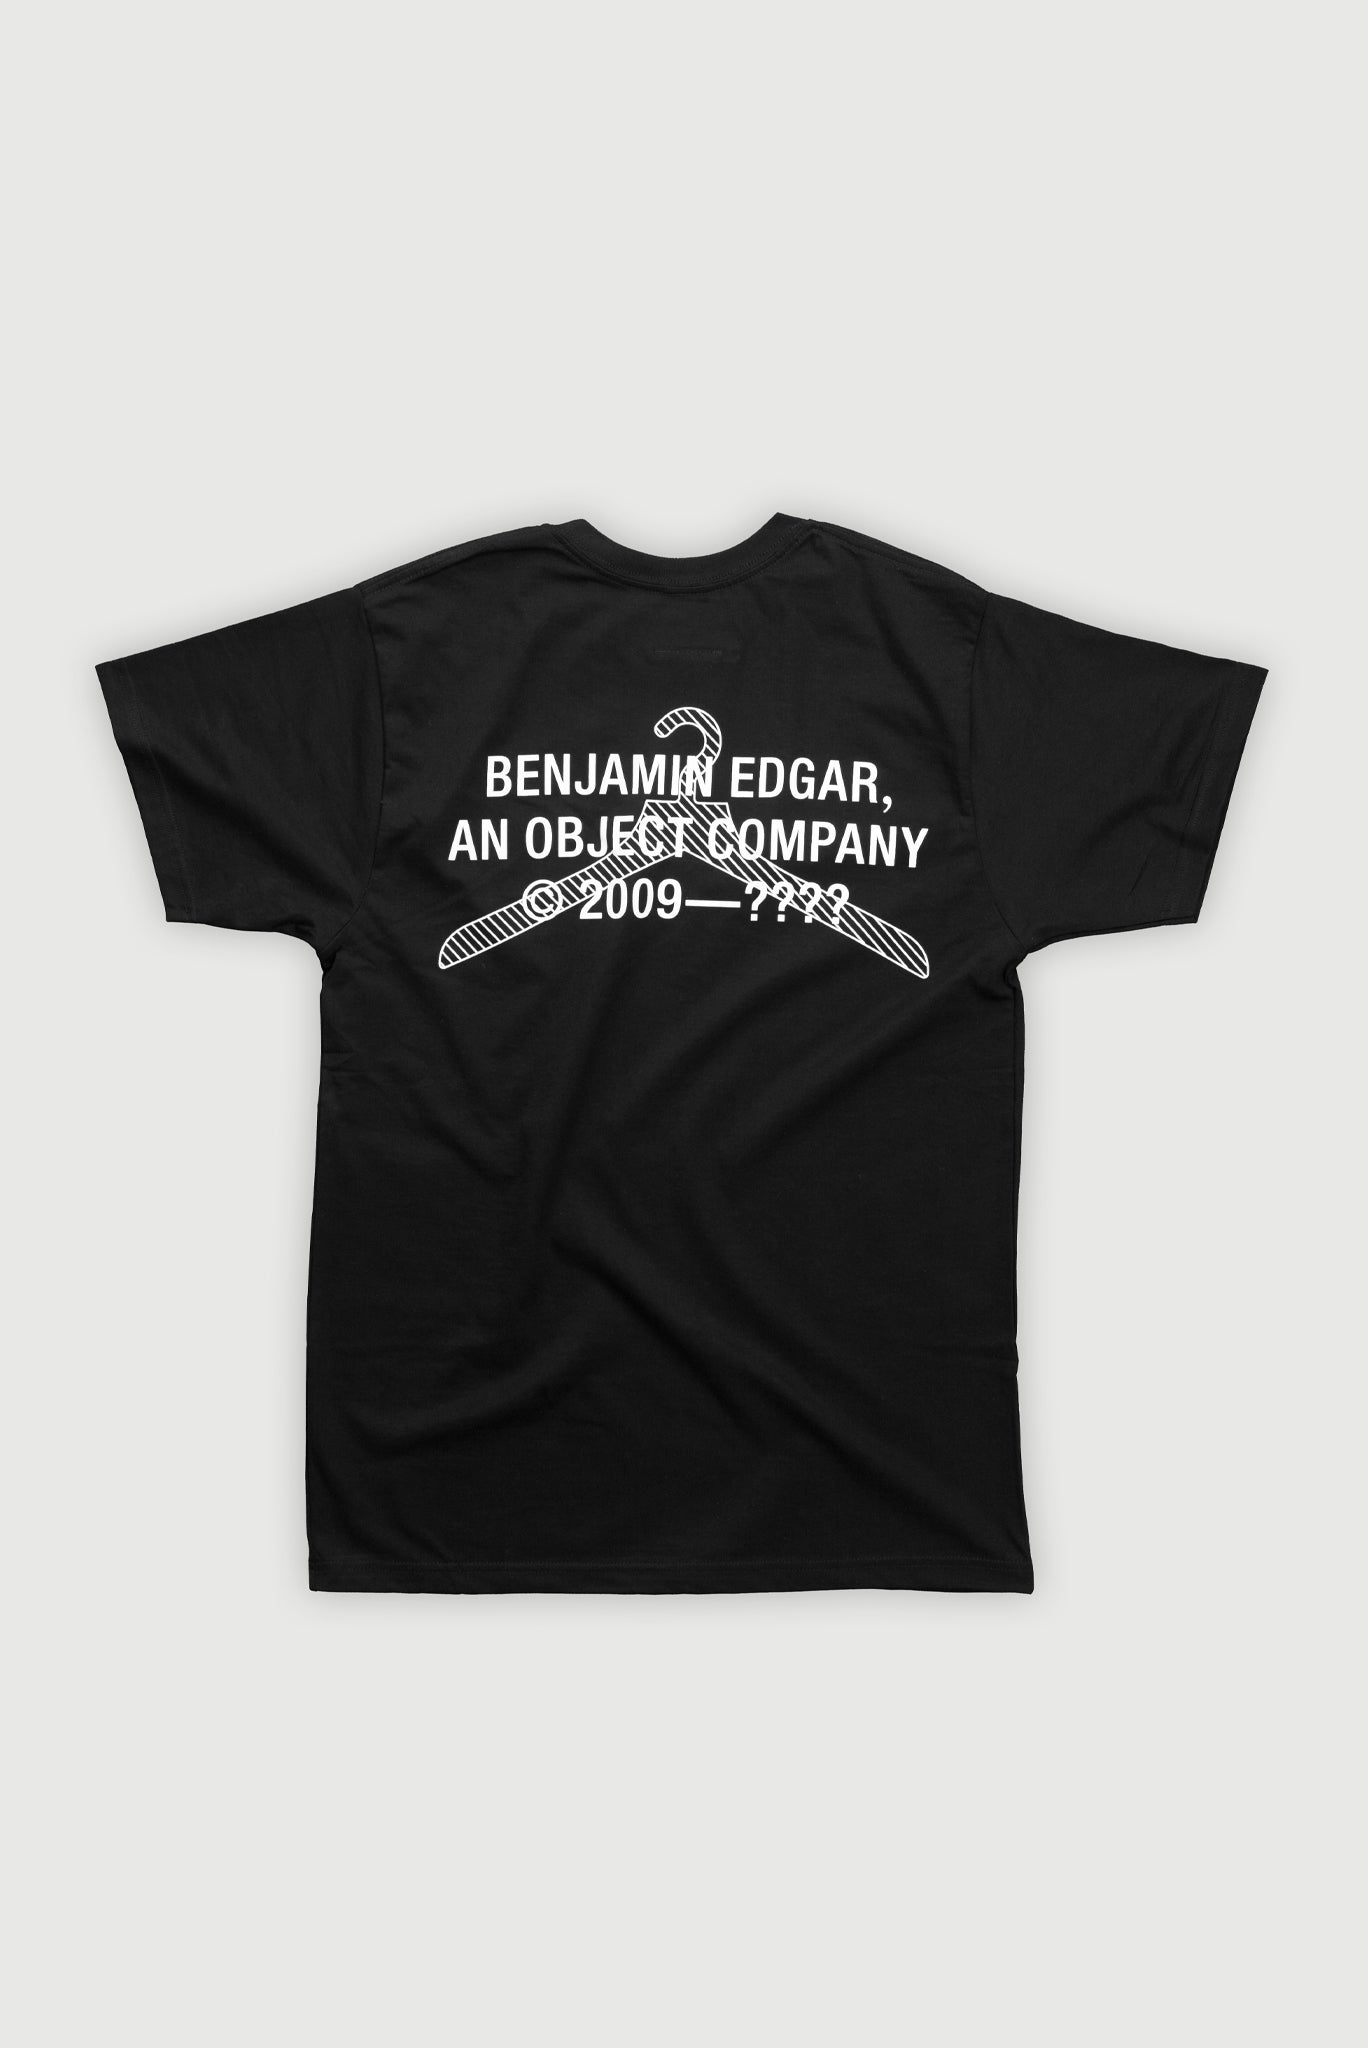 BENJAMIN EDGAR, an object company. – BENJAMIN EDGAR, object company.